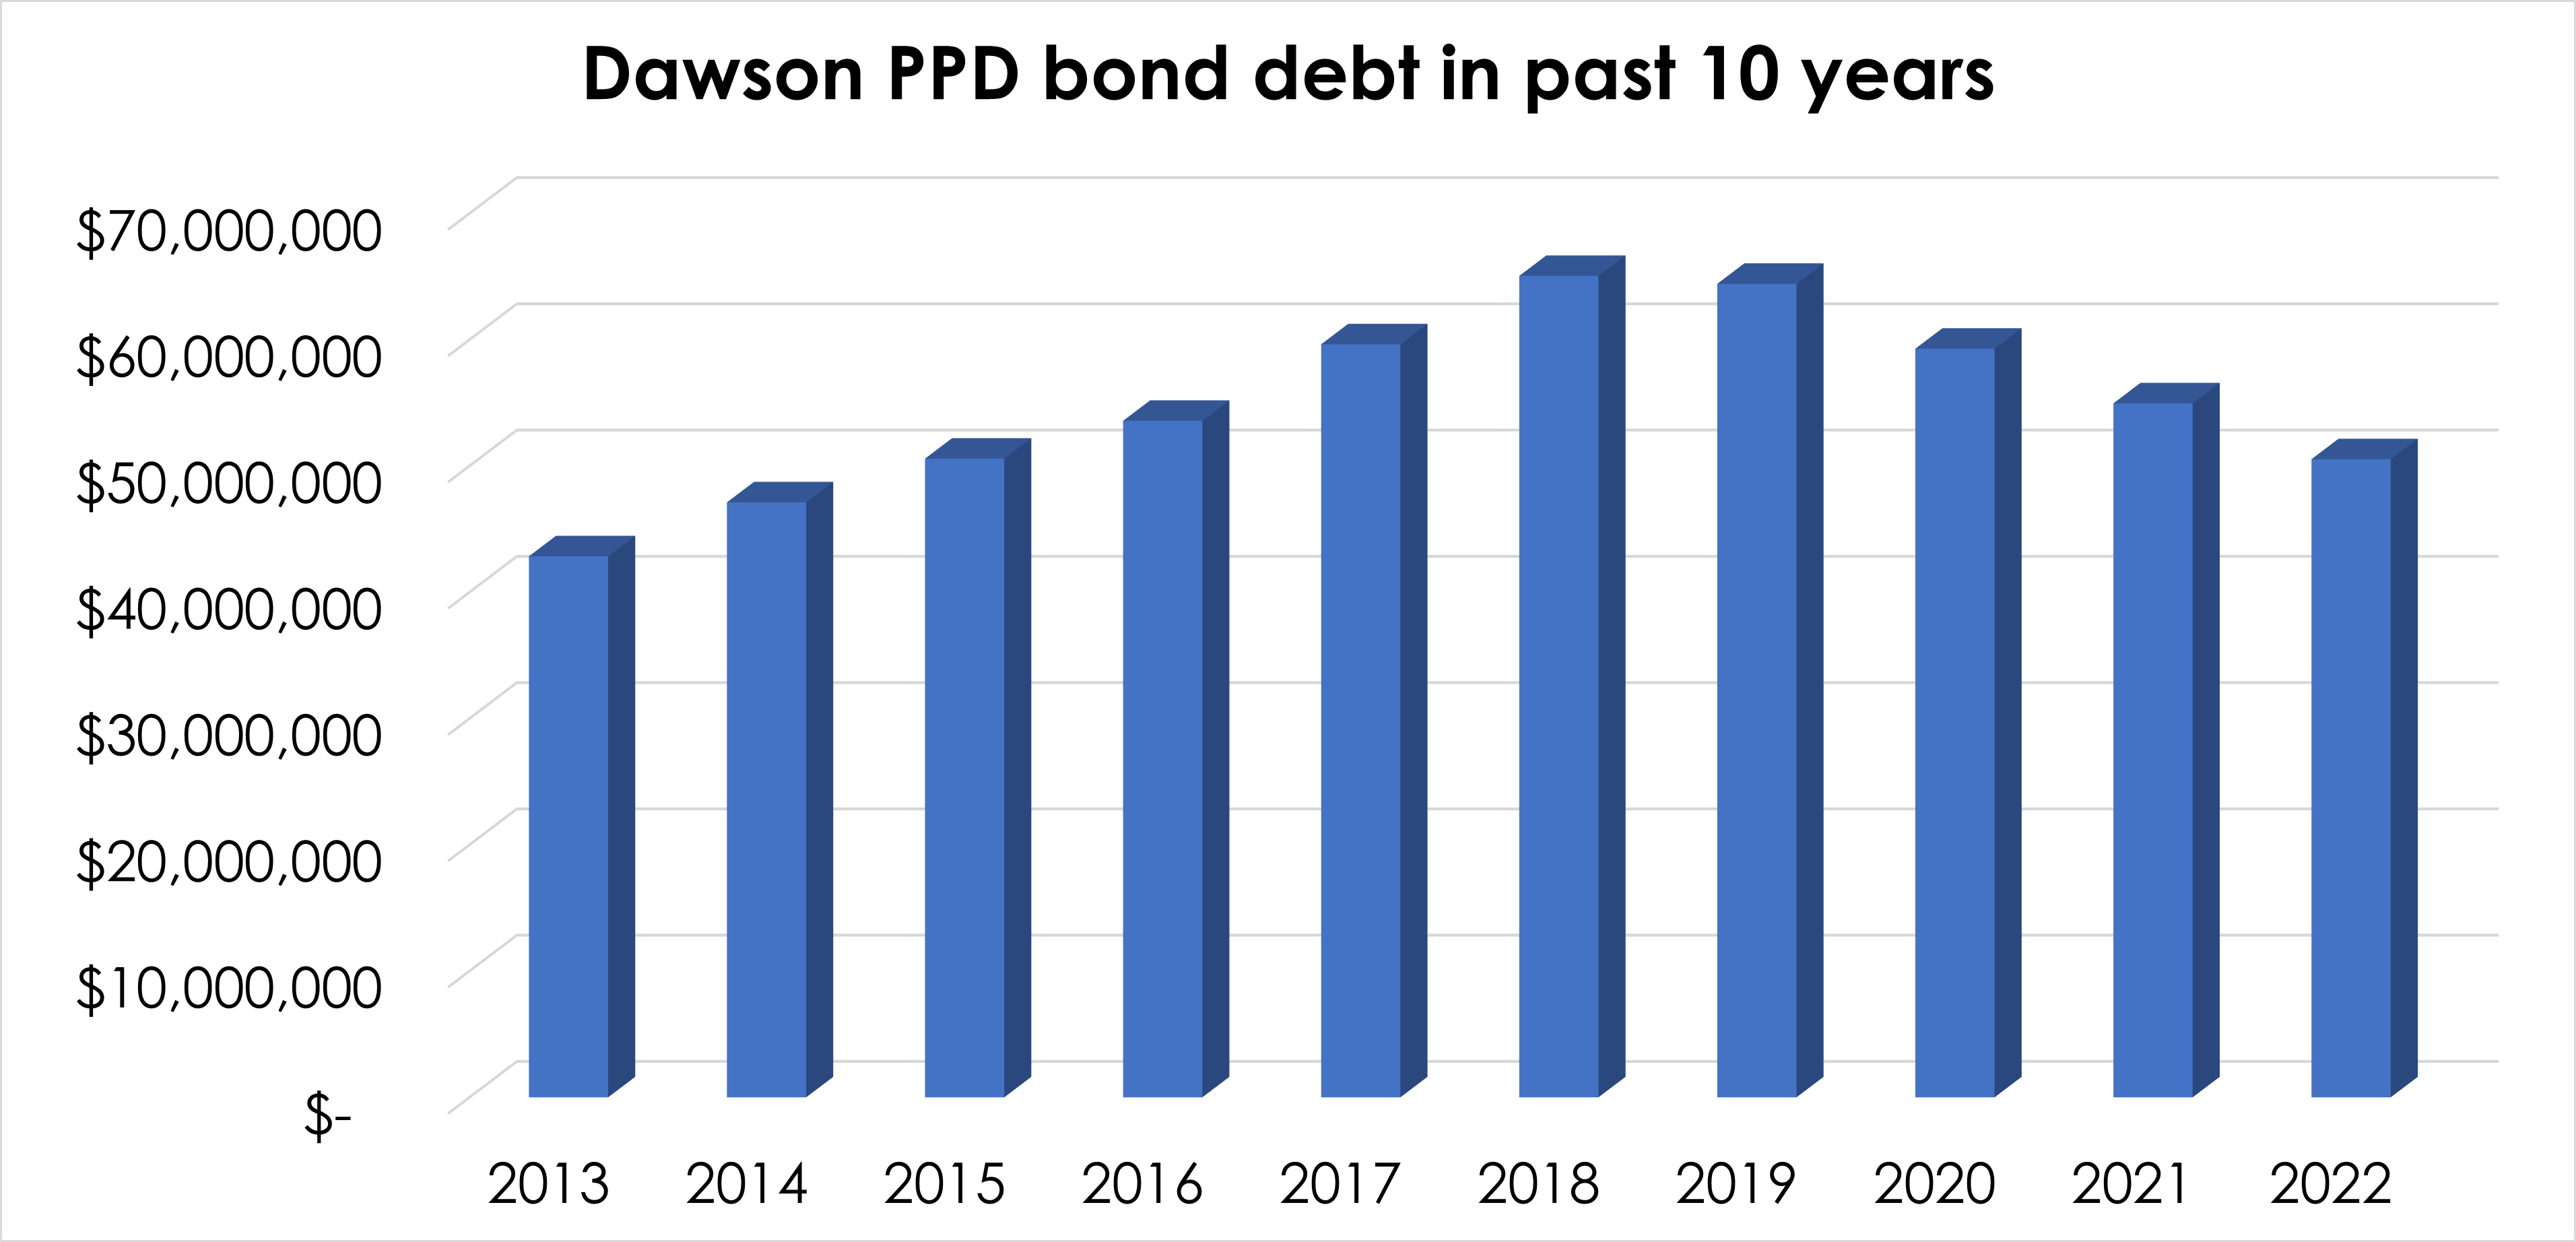 Dawson PPD bond debt 2013-2022